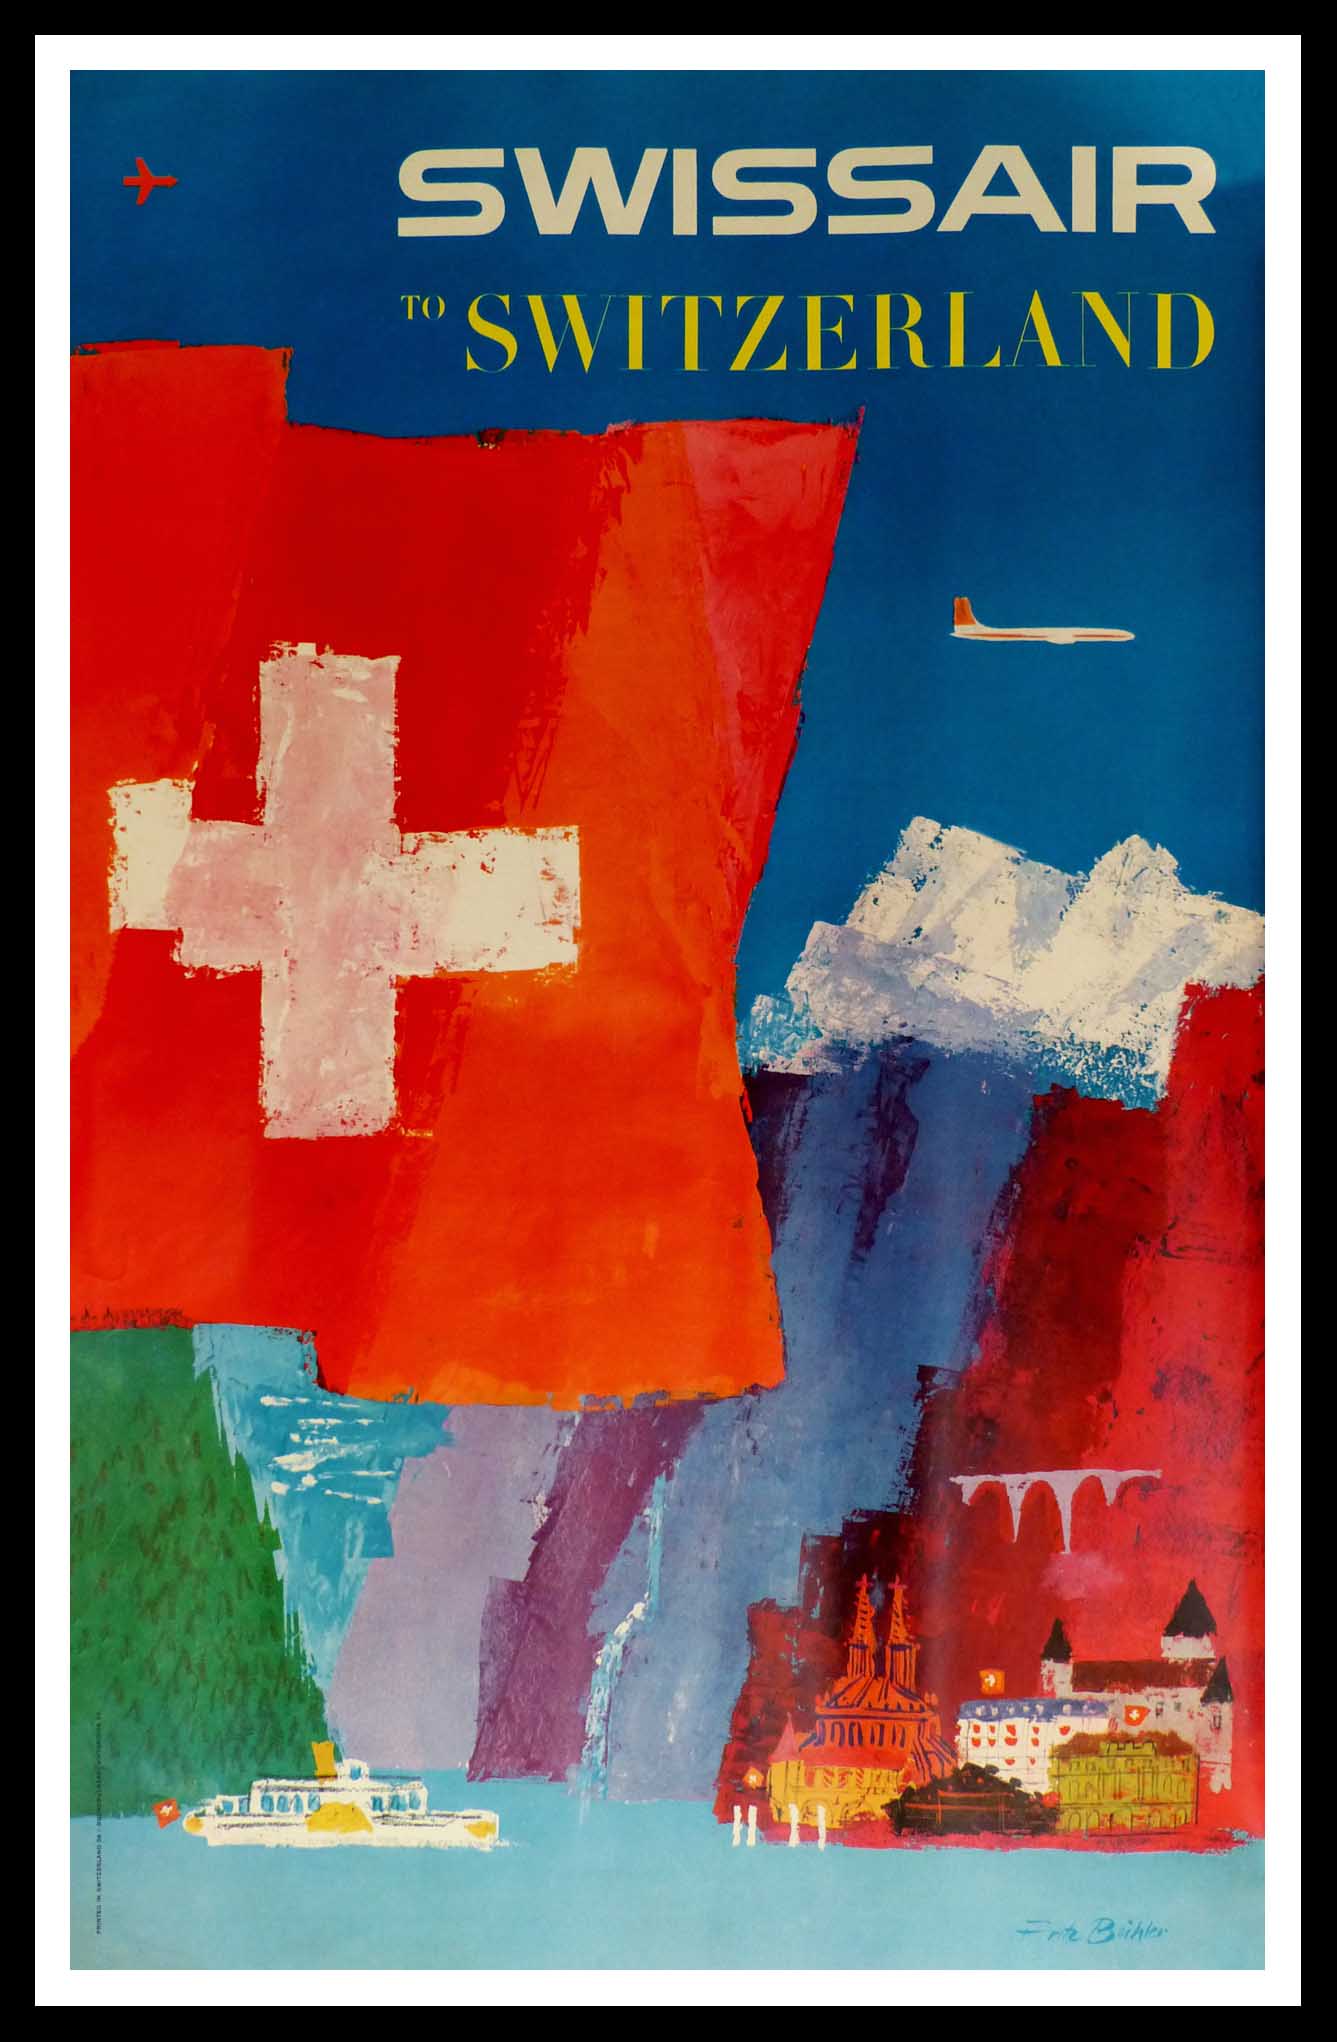 (alt="original vintage travel poster, Swiss Air to Switzerland Lac Leman, signed in the plate Fritz BÜHLER printed by Buchdruckerei Winterthur 1958")